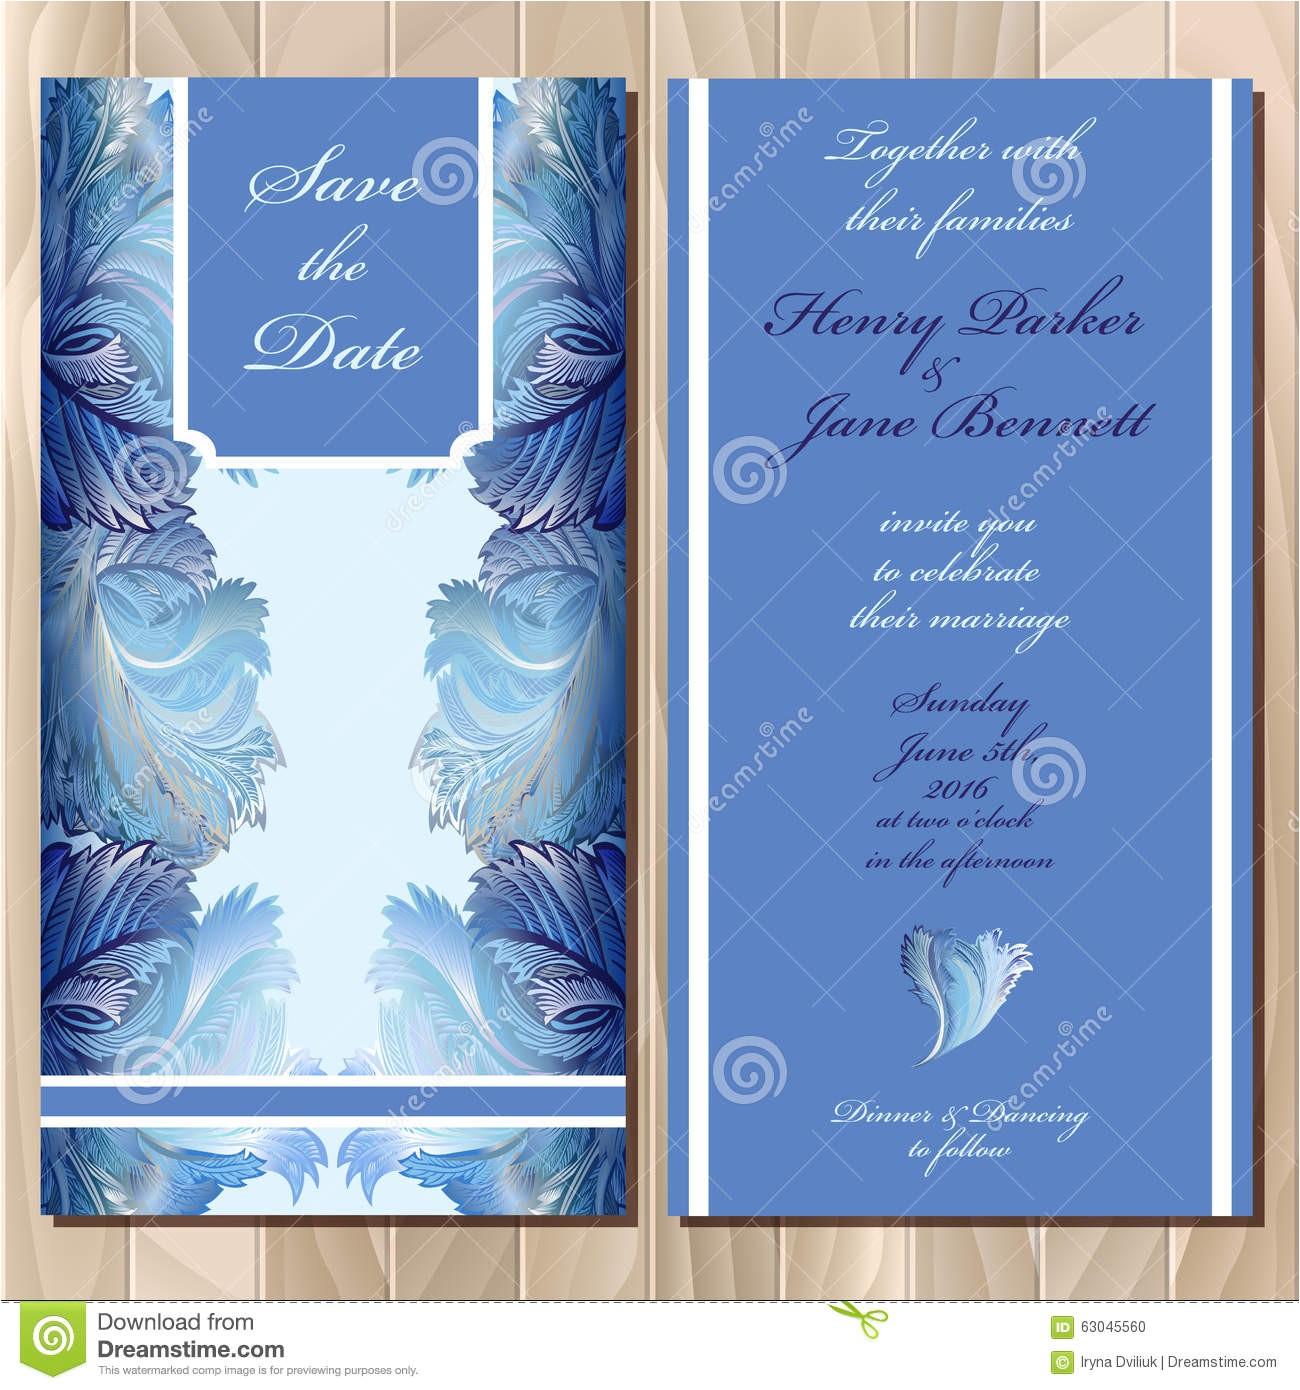 stock illustration winter frozen glass design wedding invitation card vector illustration set printable backgrounds blue image63045560